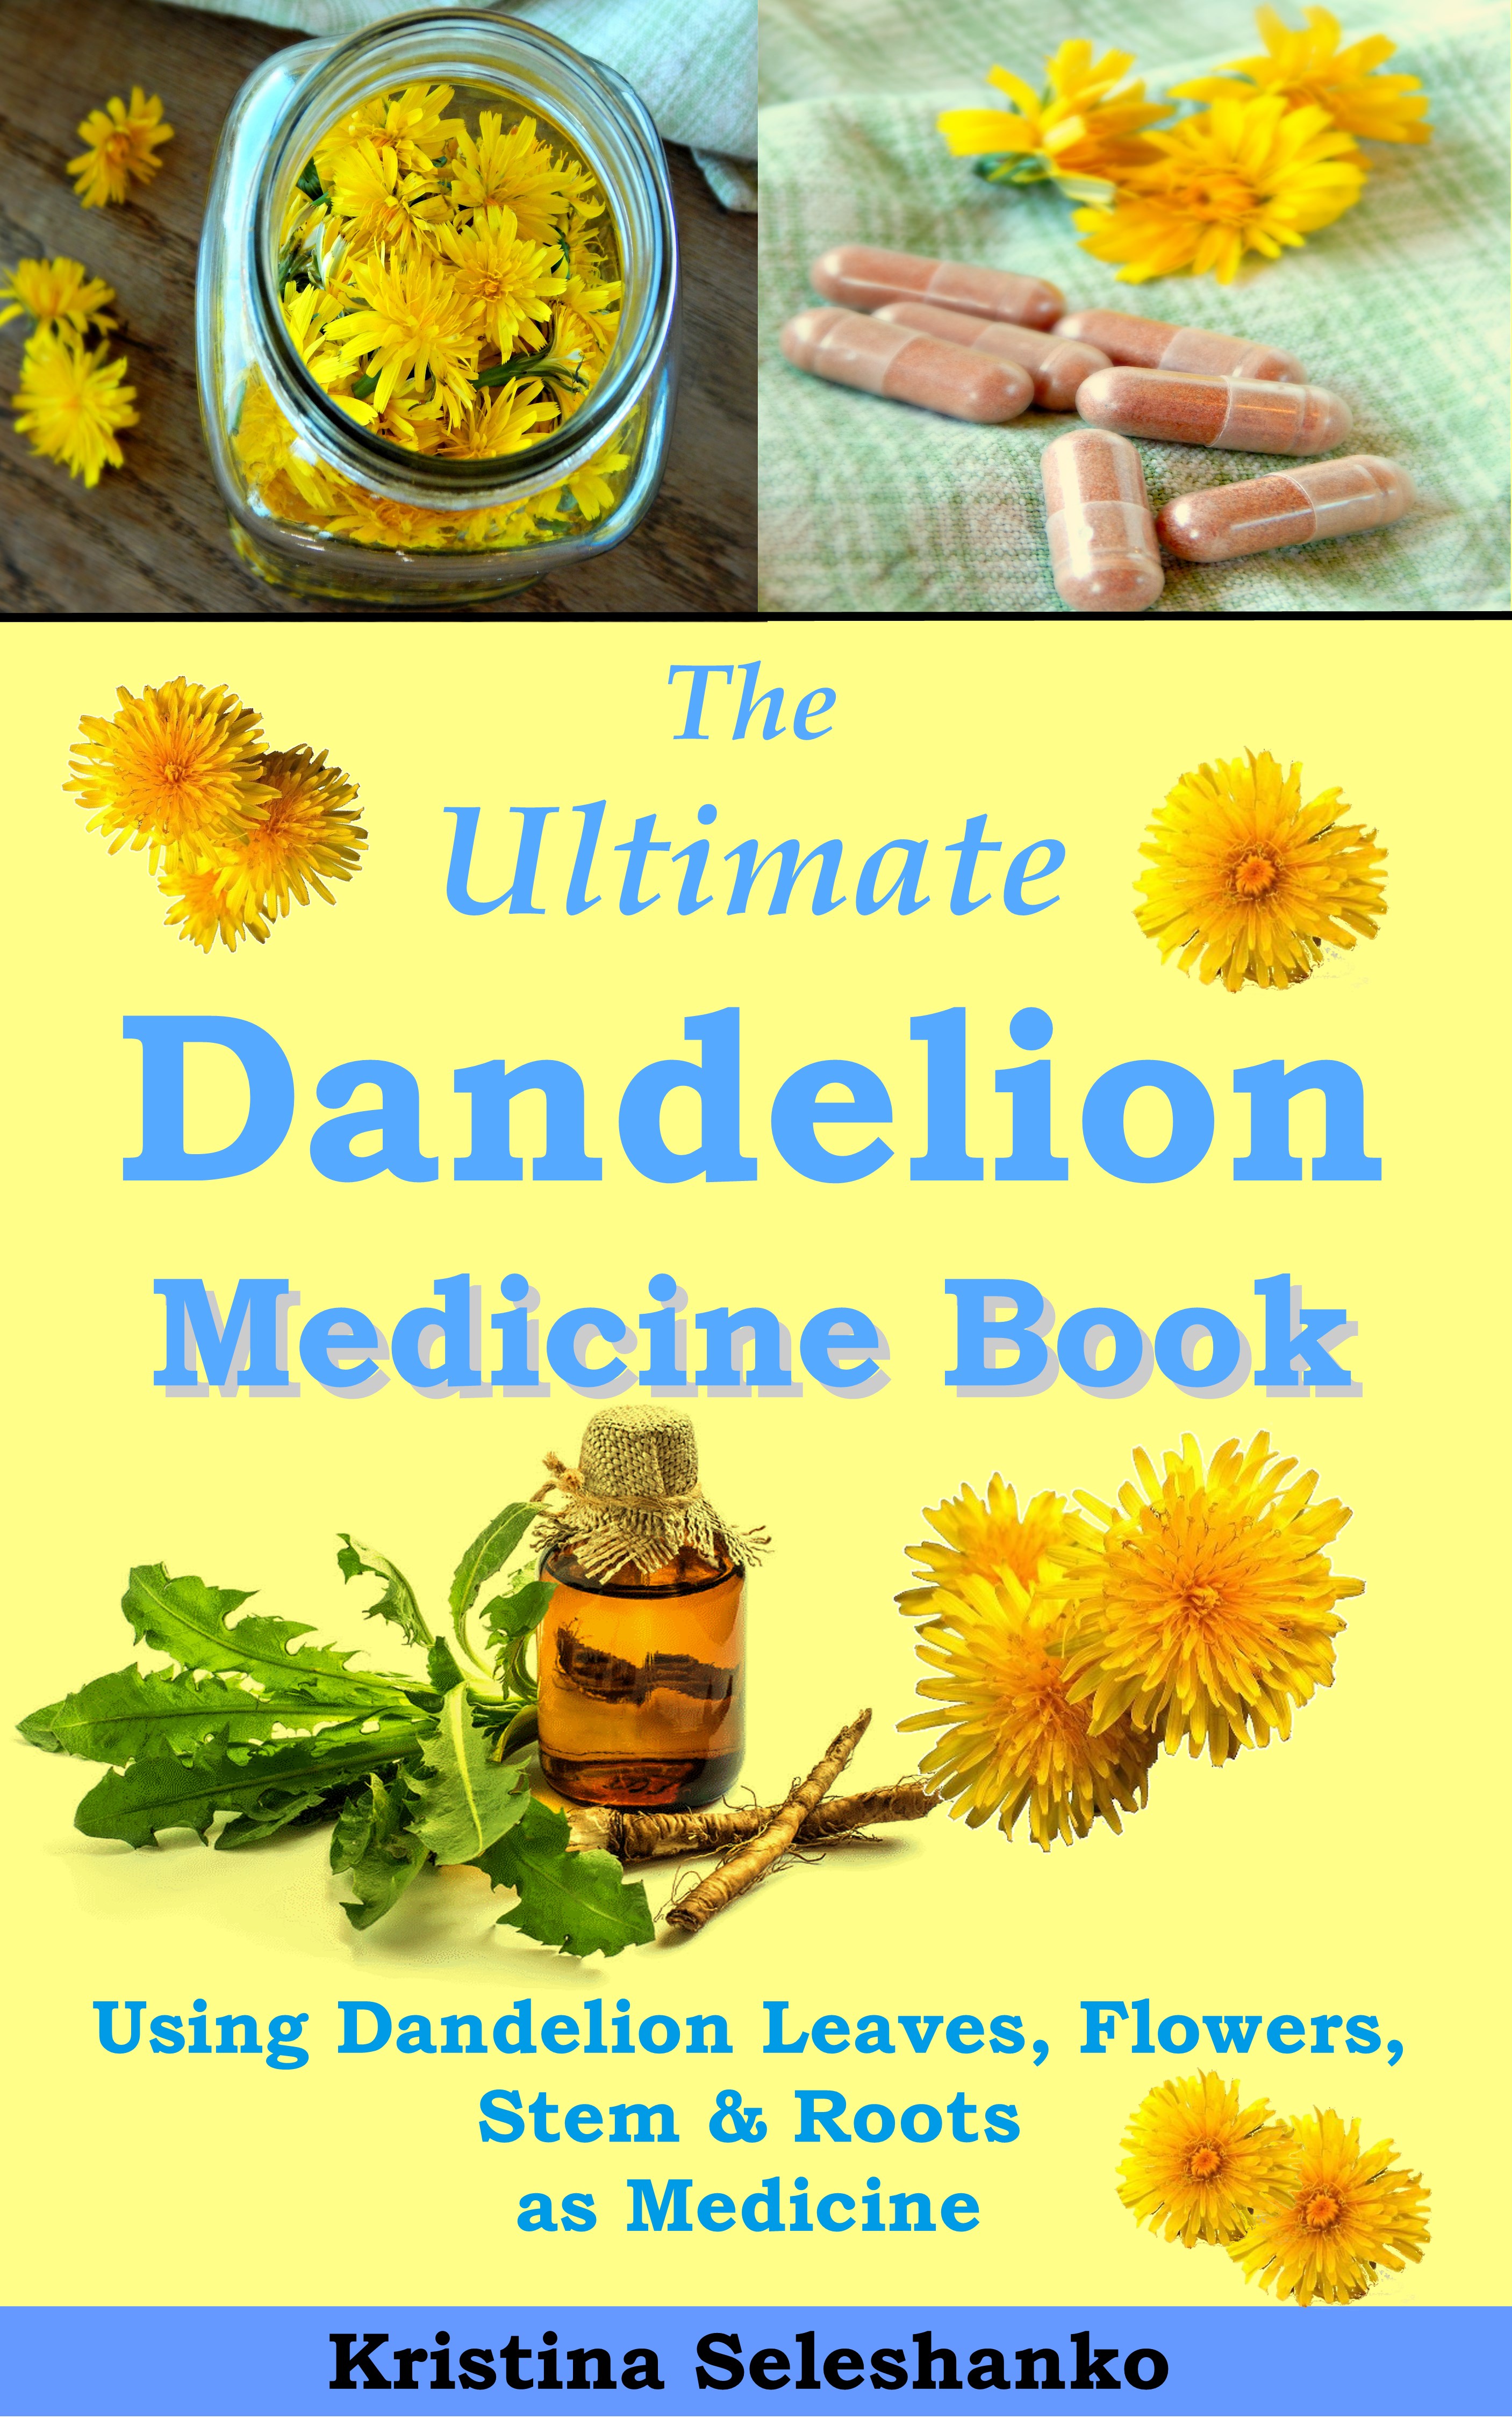 FREE: The Ultimate Dandelion Medicine Book by Kristina Seleshanko